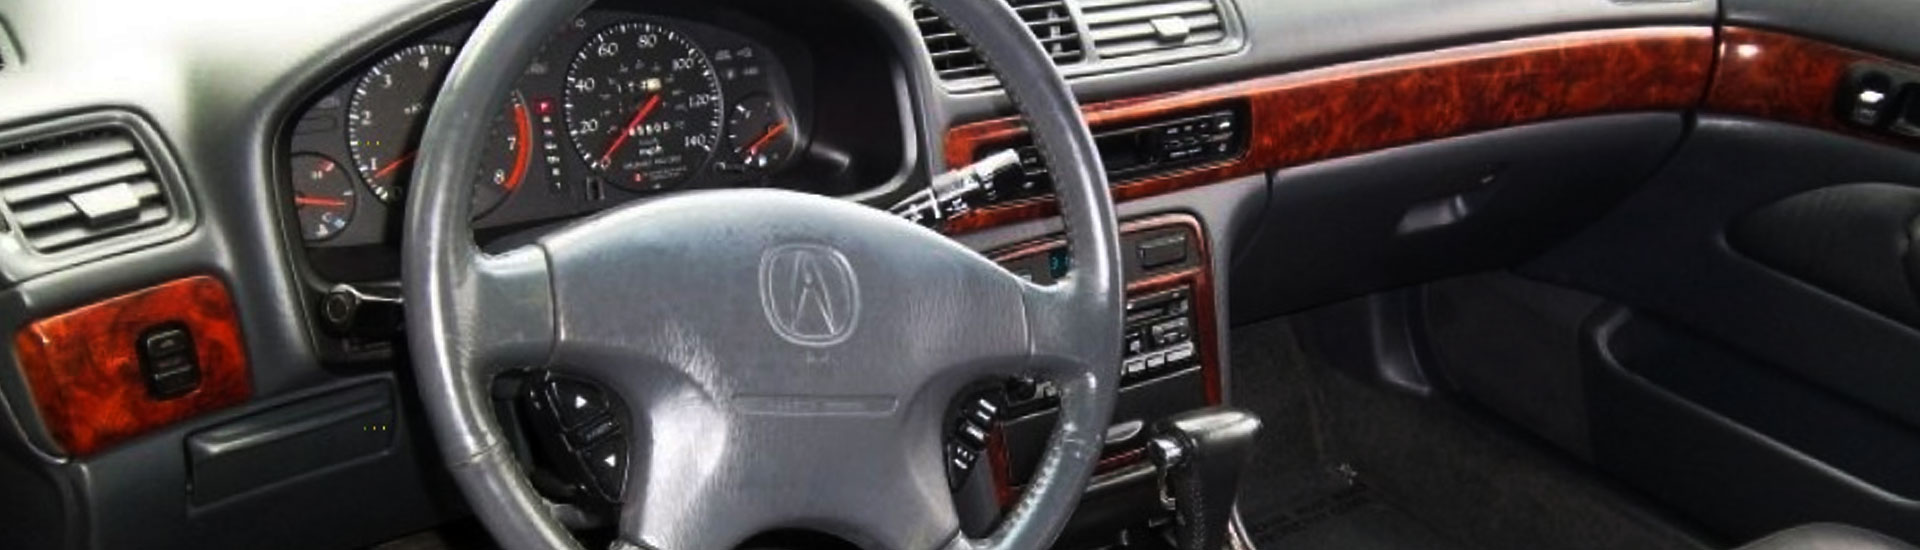 Acura CL Custom Dash Kits